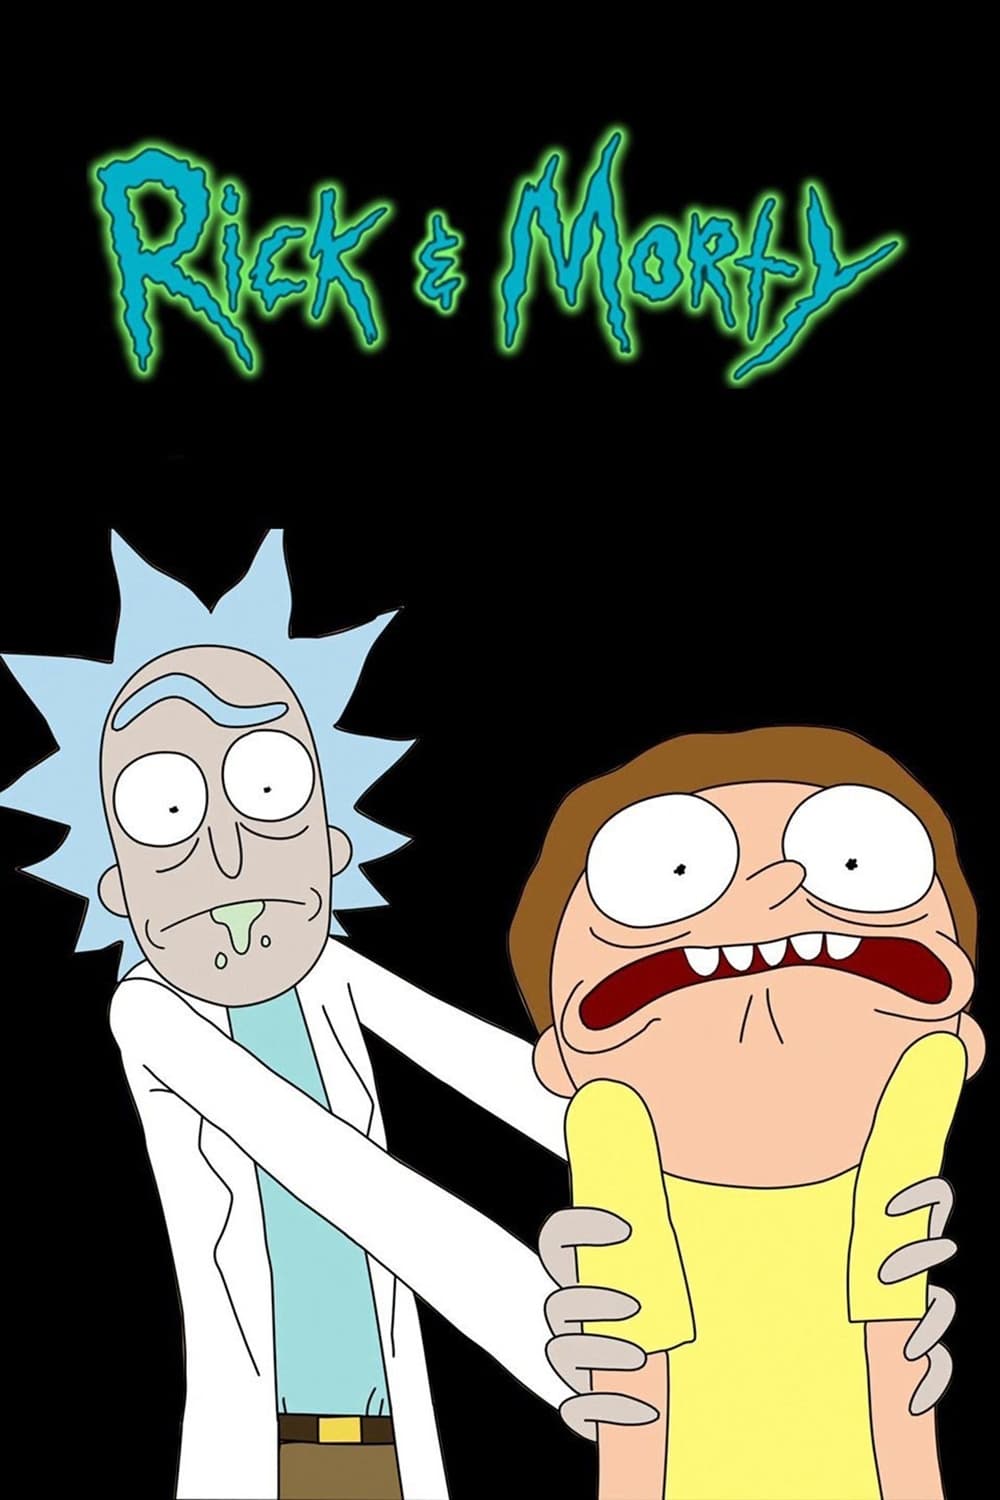 Rick & Morty S5